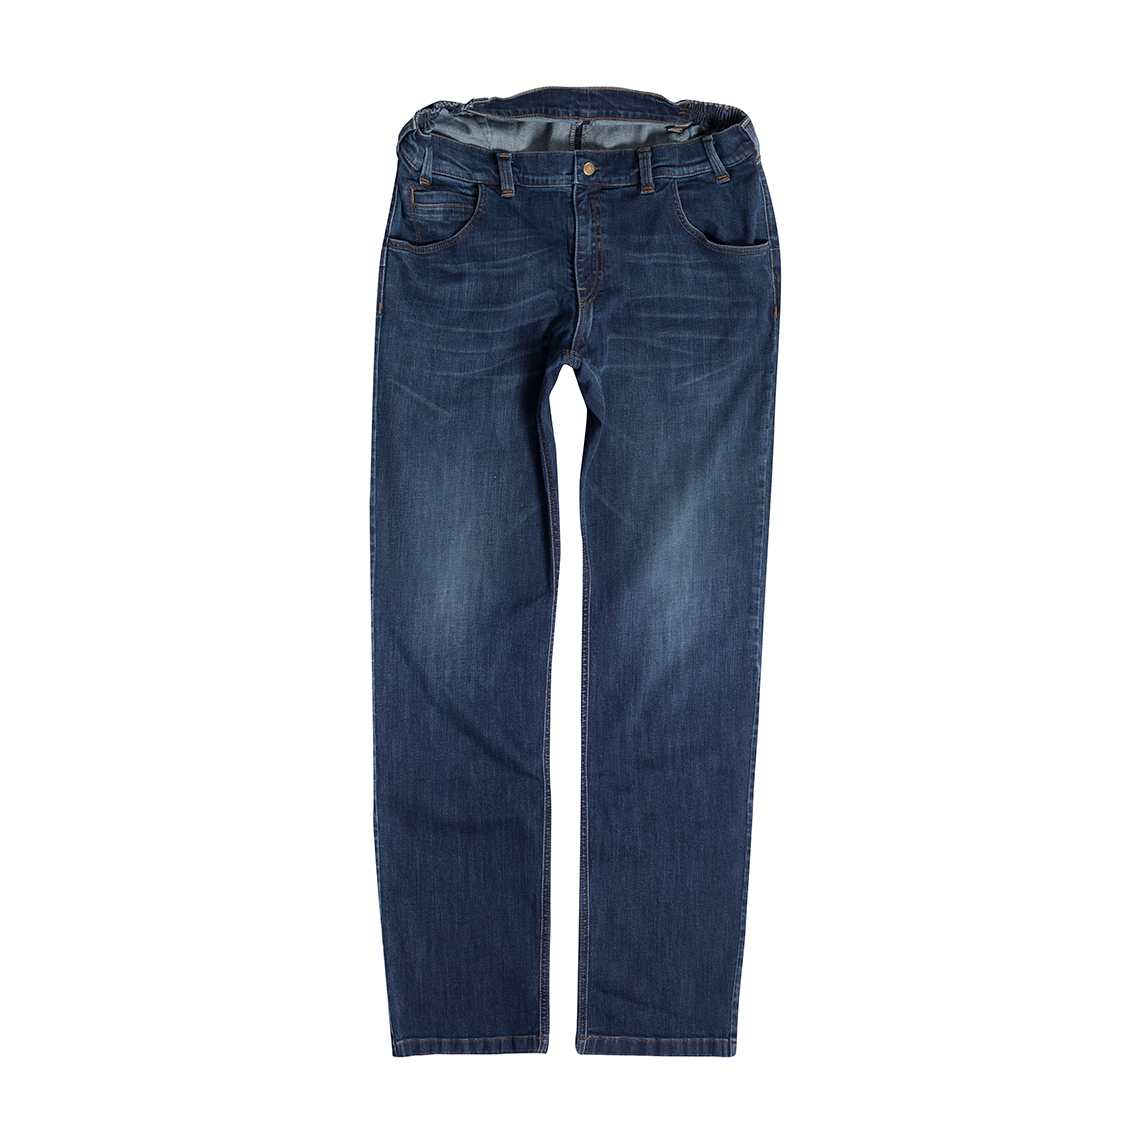 Herren Jeans  Fashion washed, blau MIKE 10391 56